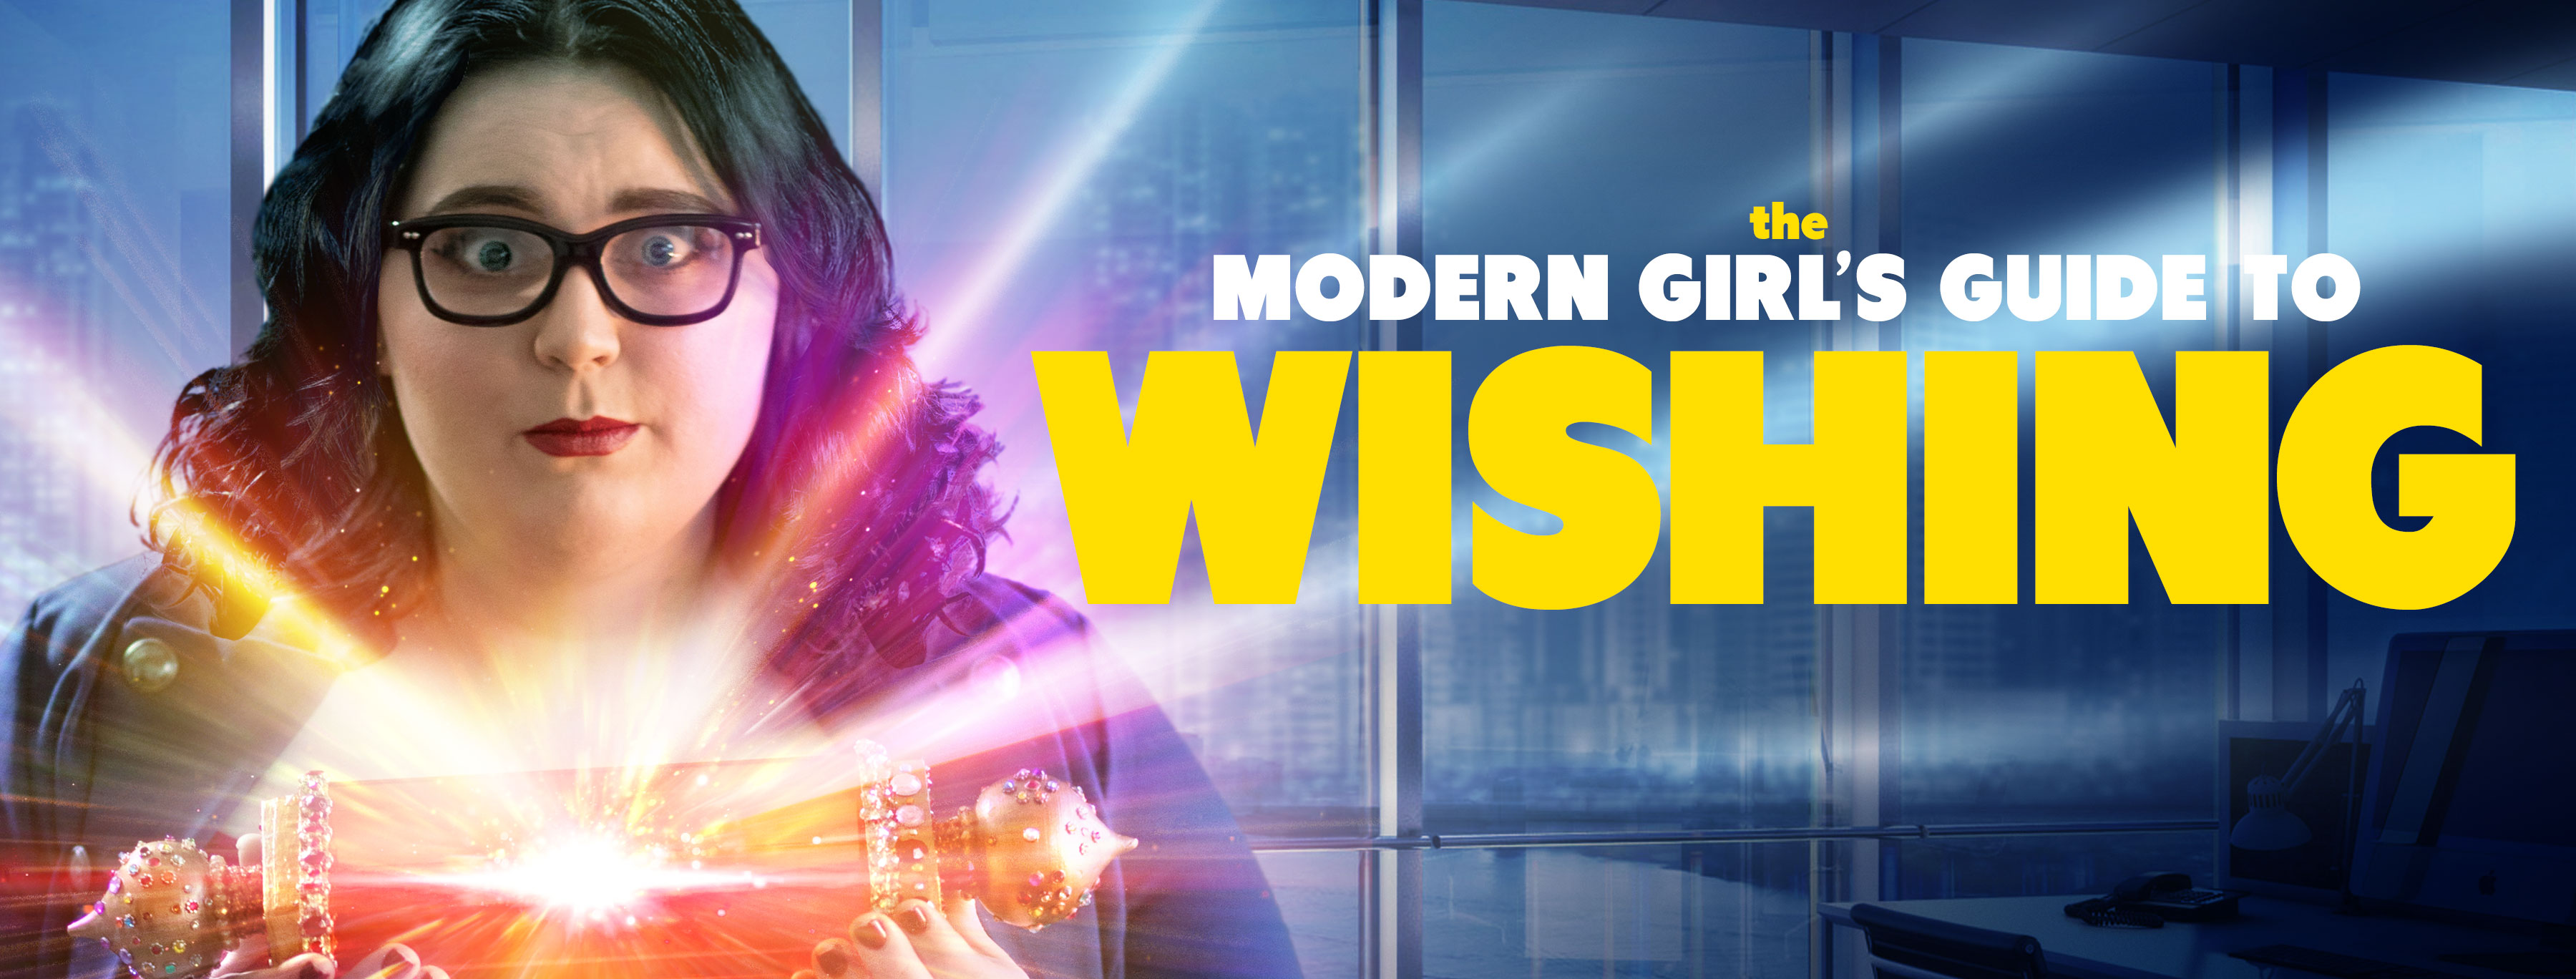 The Modern Girl's Guide to Wishing